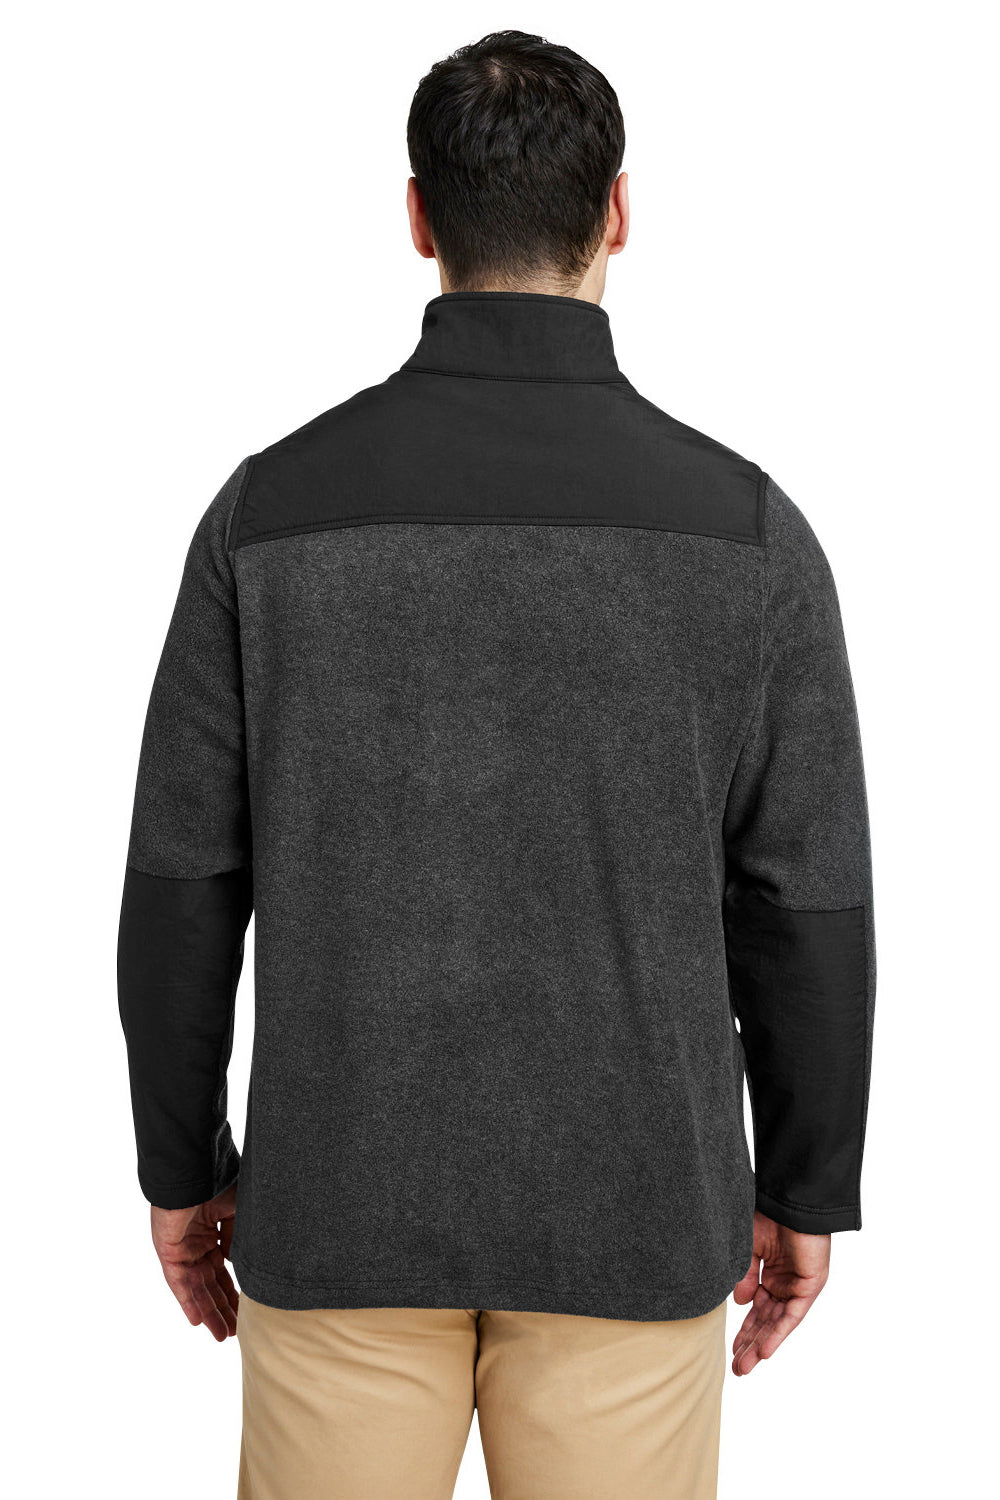 Core 365 CE890 Mens Journey Summit Hybrid Full Zip Jacket Heather Charcoal Grey/Black Back